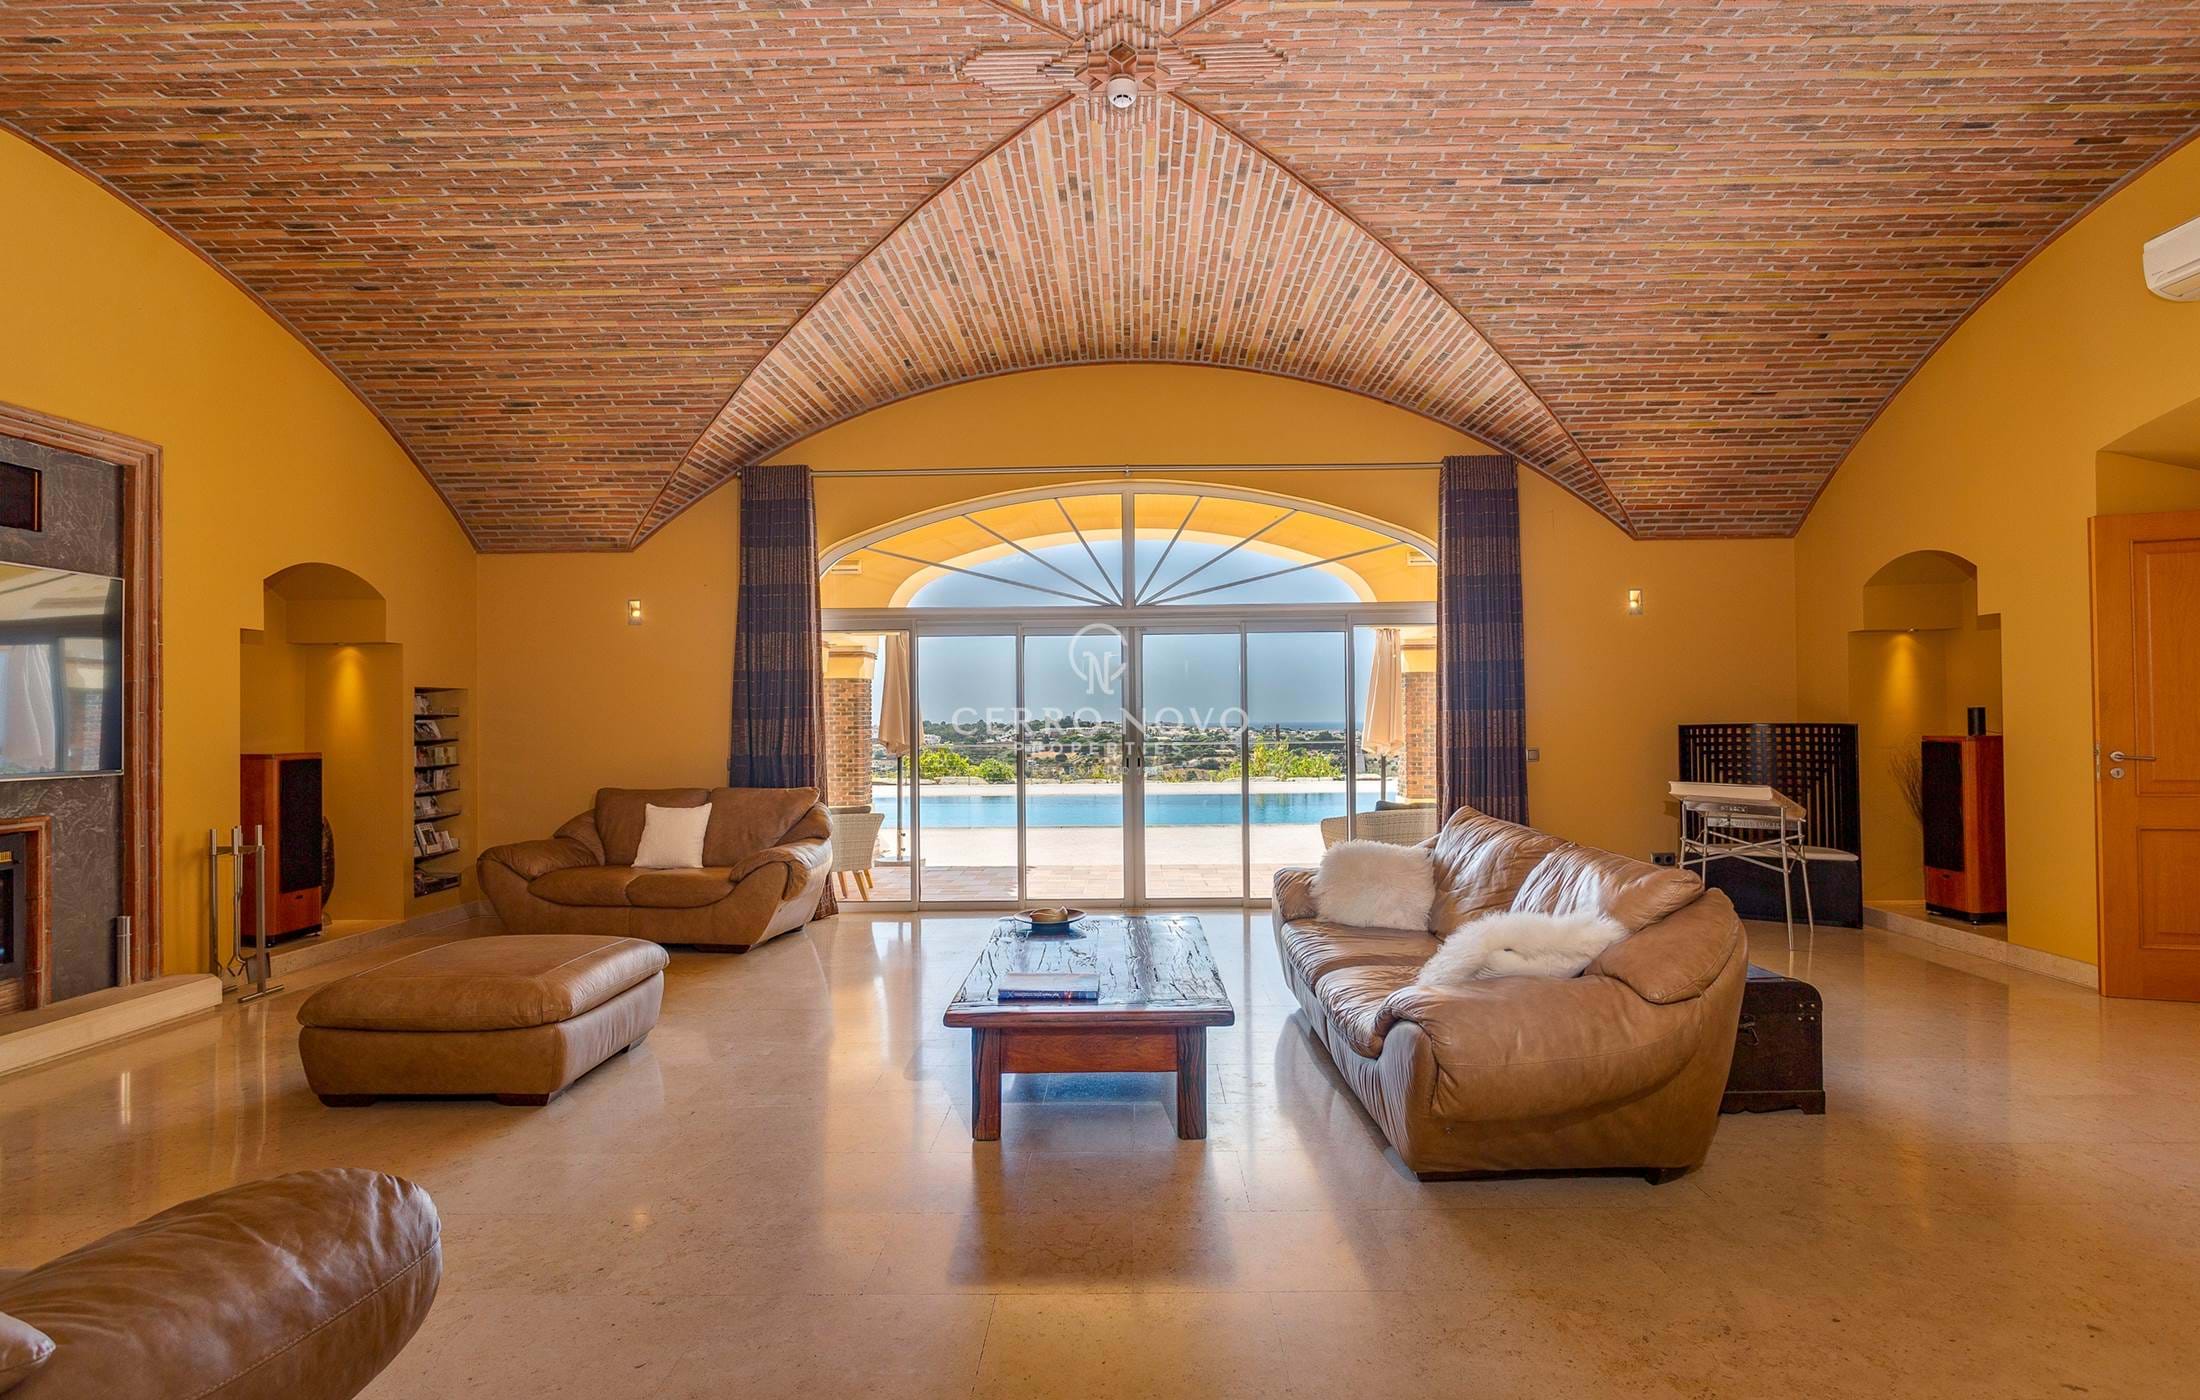 Stunning, luxury, five bedroom villa with breathtaking ocean views